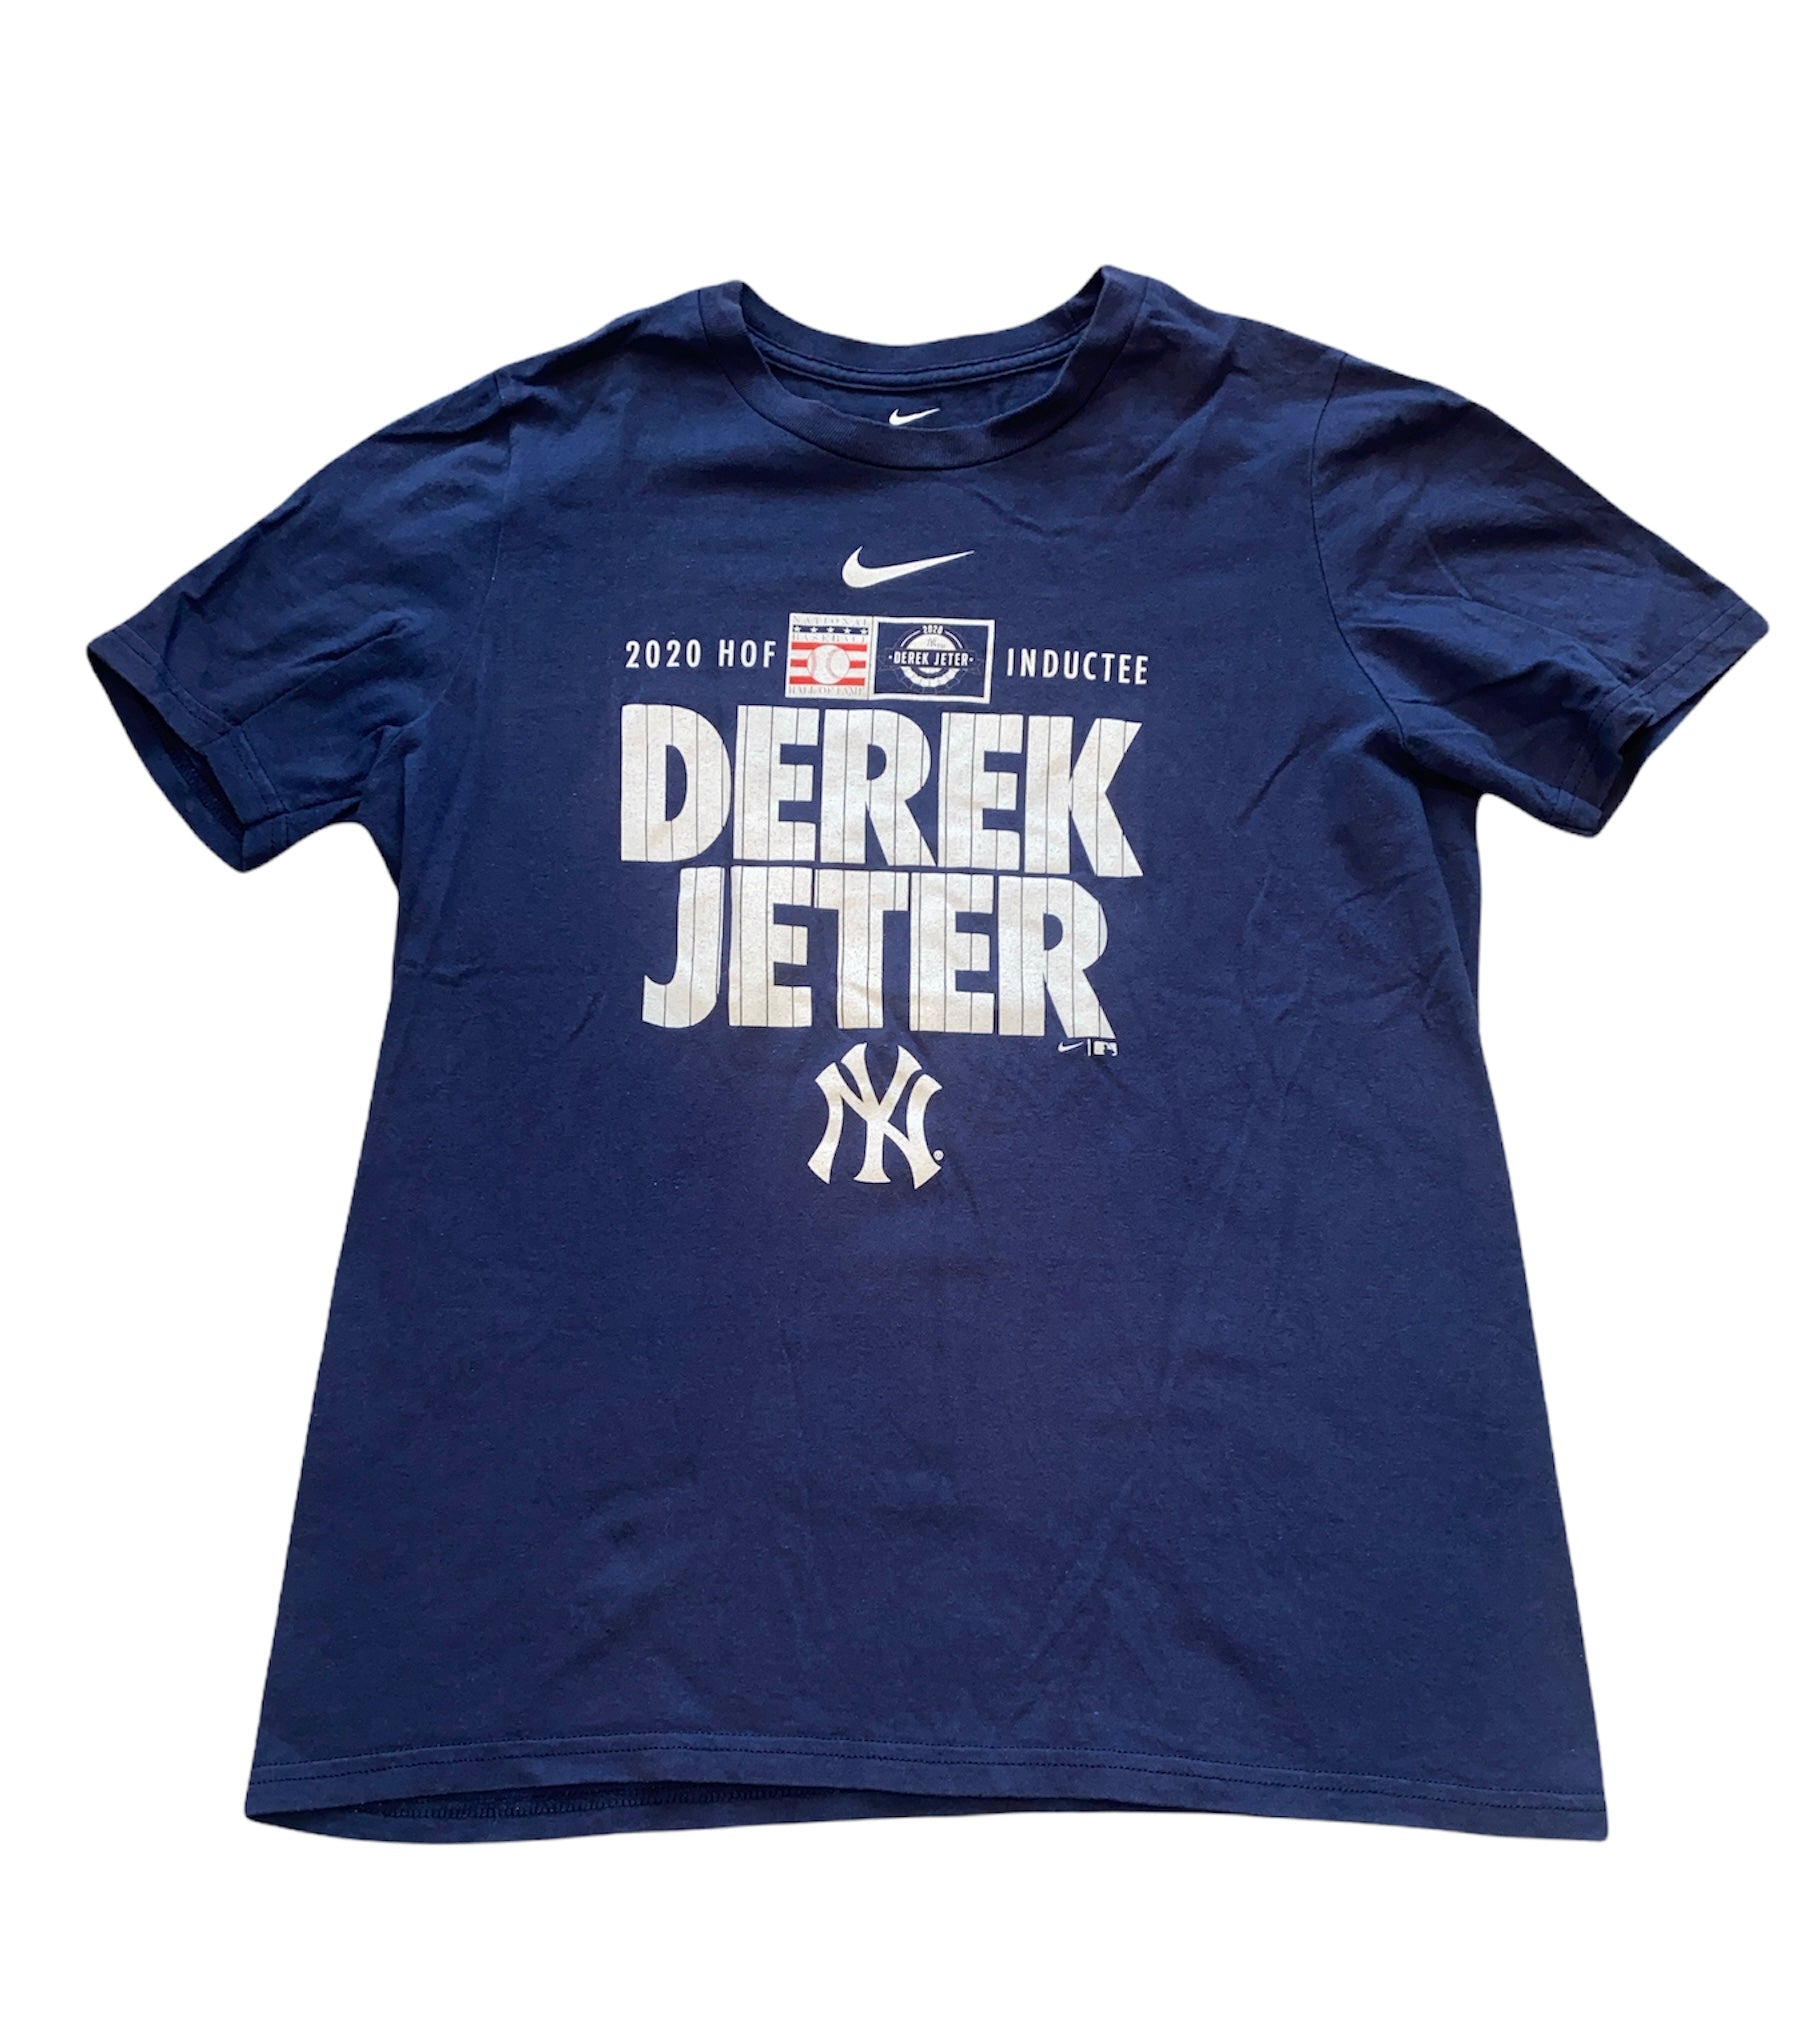 The Nike Tee Boys Derek Jeter Yankees Tee Shirt L(14-16)